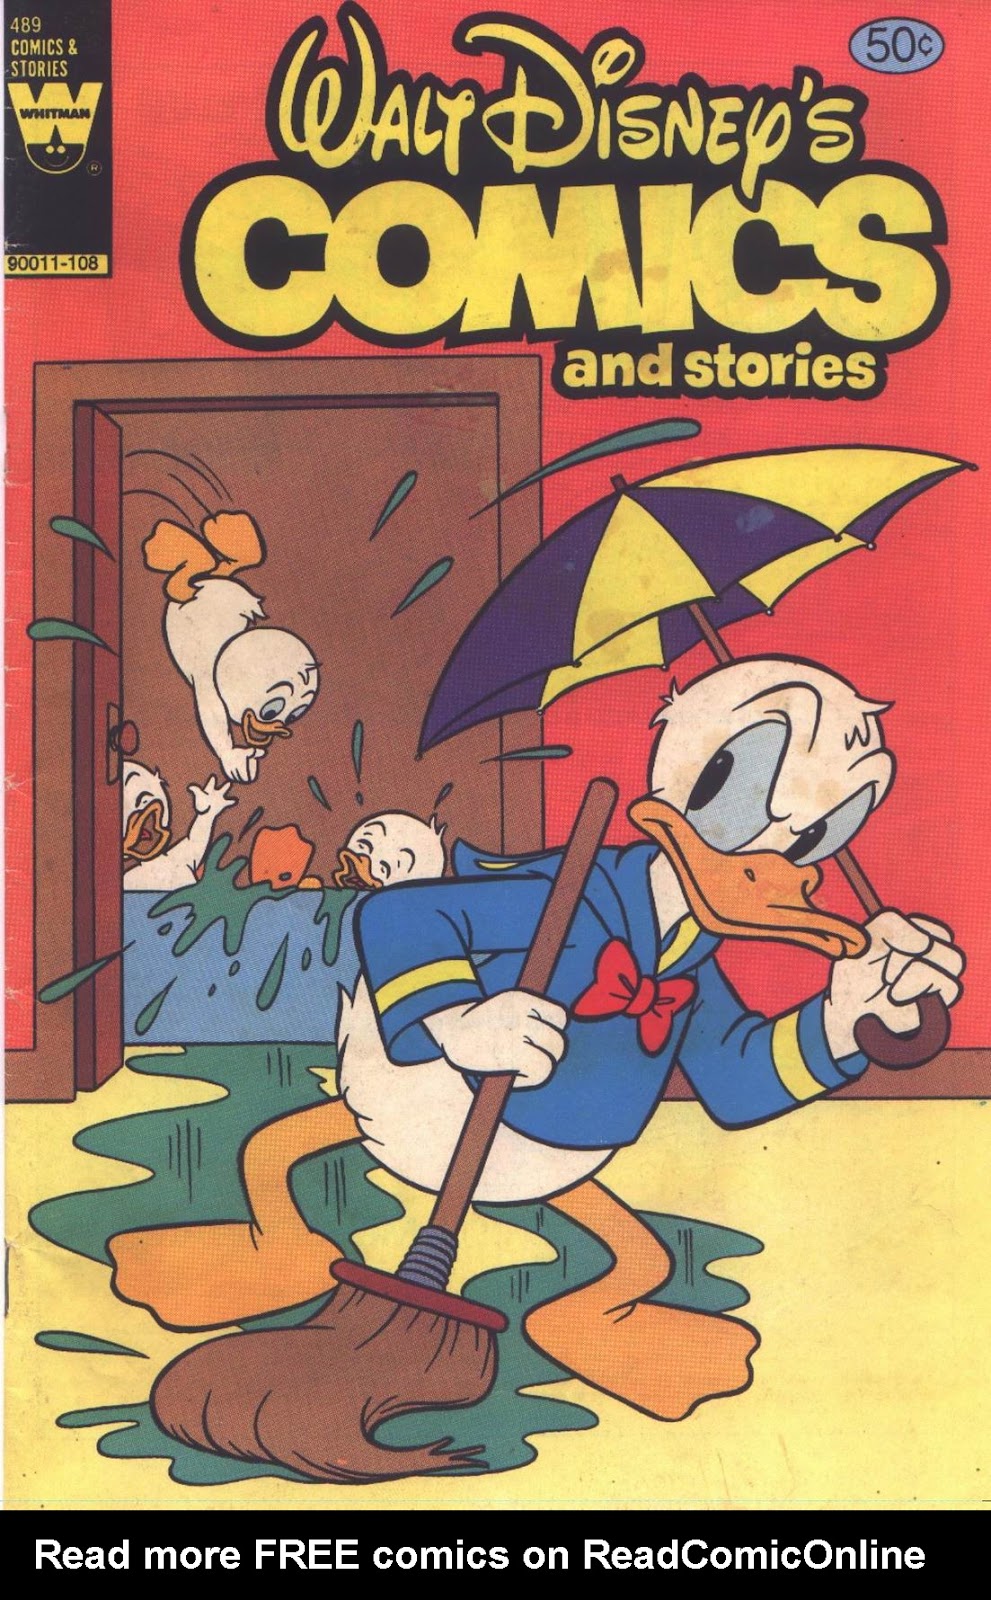 Walt Disneys Comics and Stories 489 Page 1